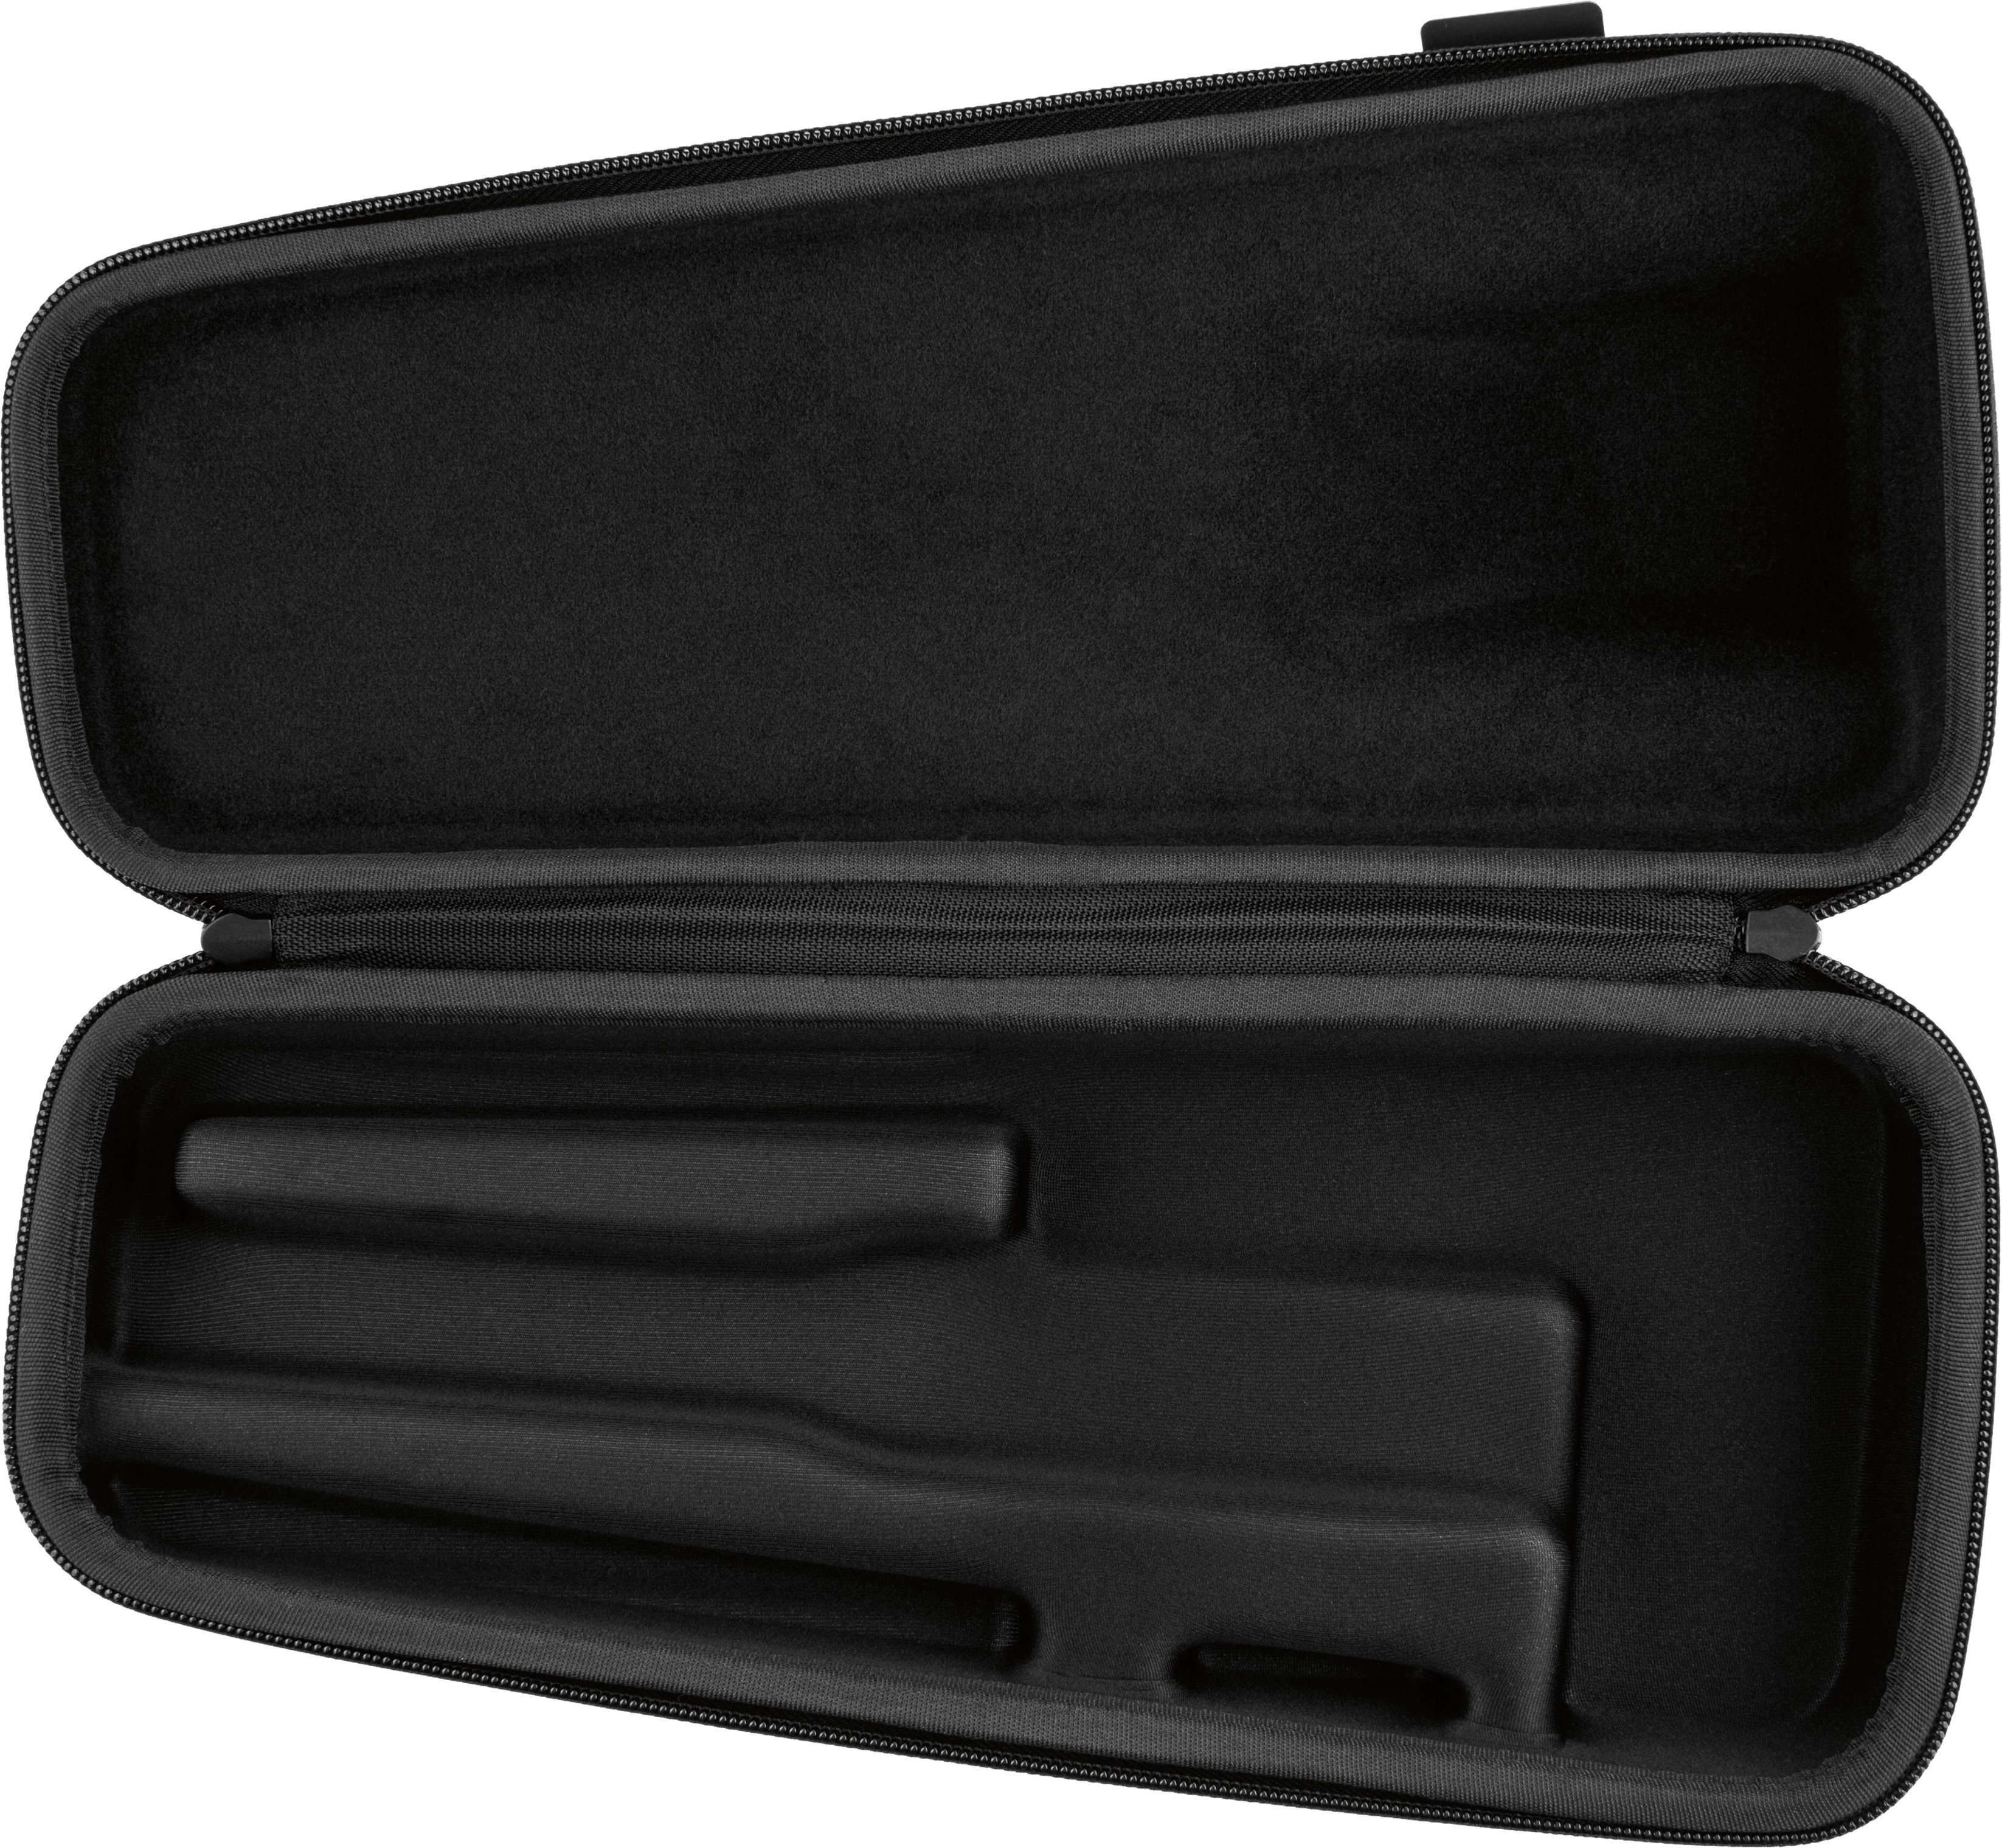 GoPro Karma™ Grip Case AAGCC-001 - Best Buy